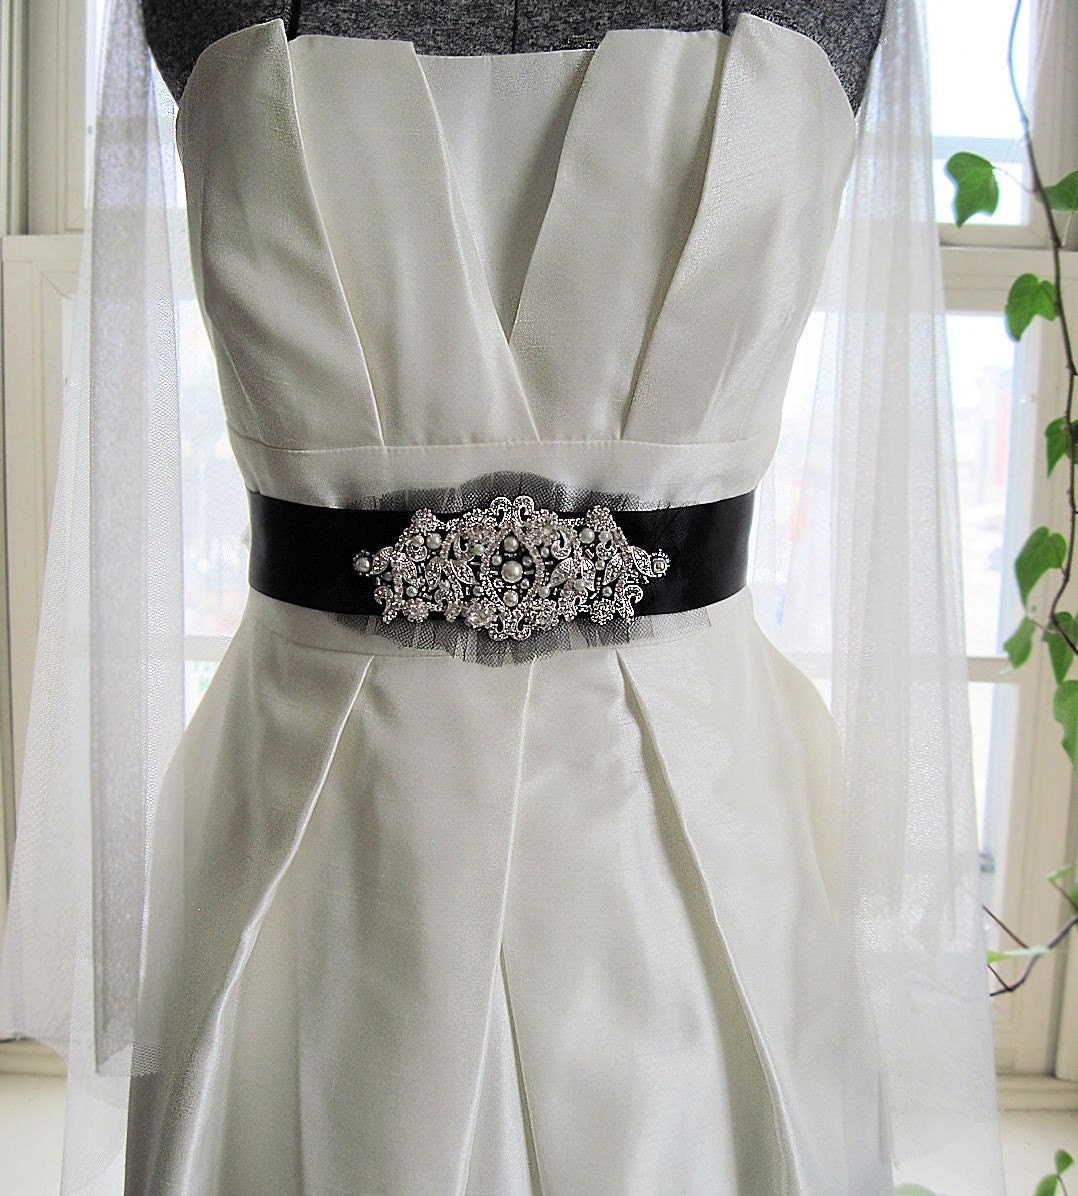 Rhinestone and Pearls bridal sash in black